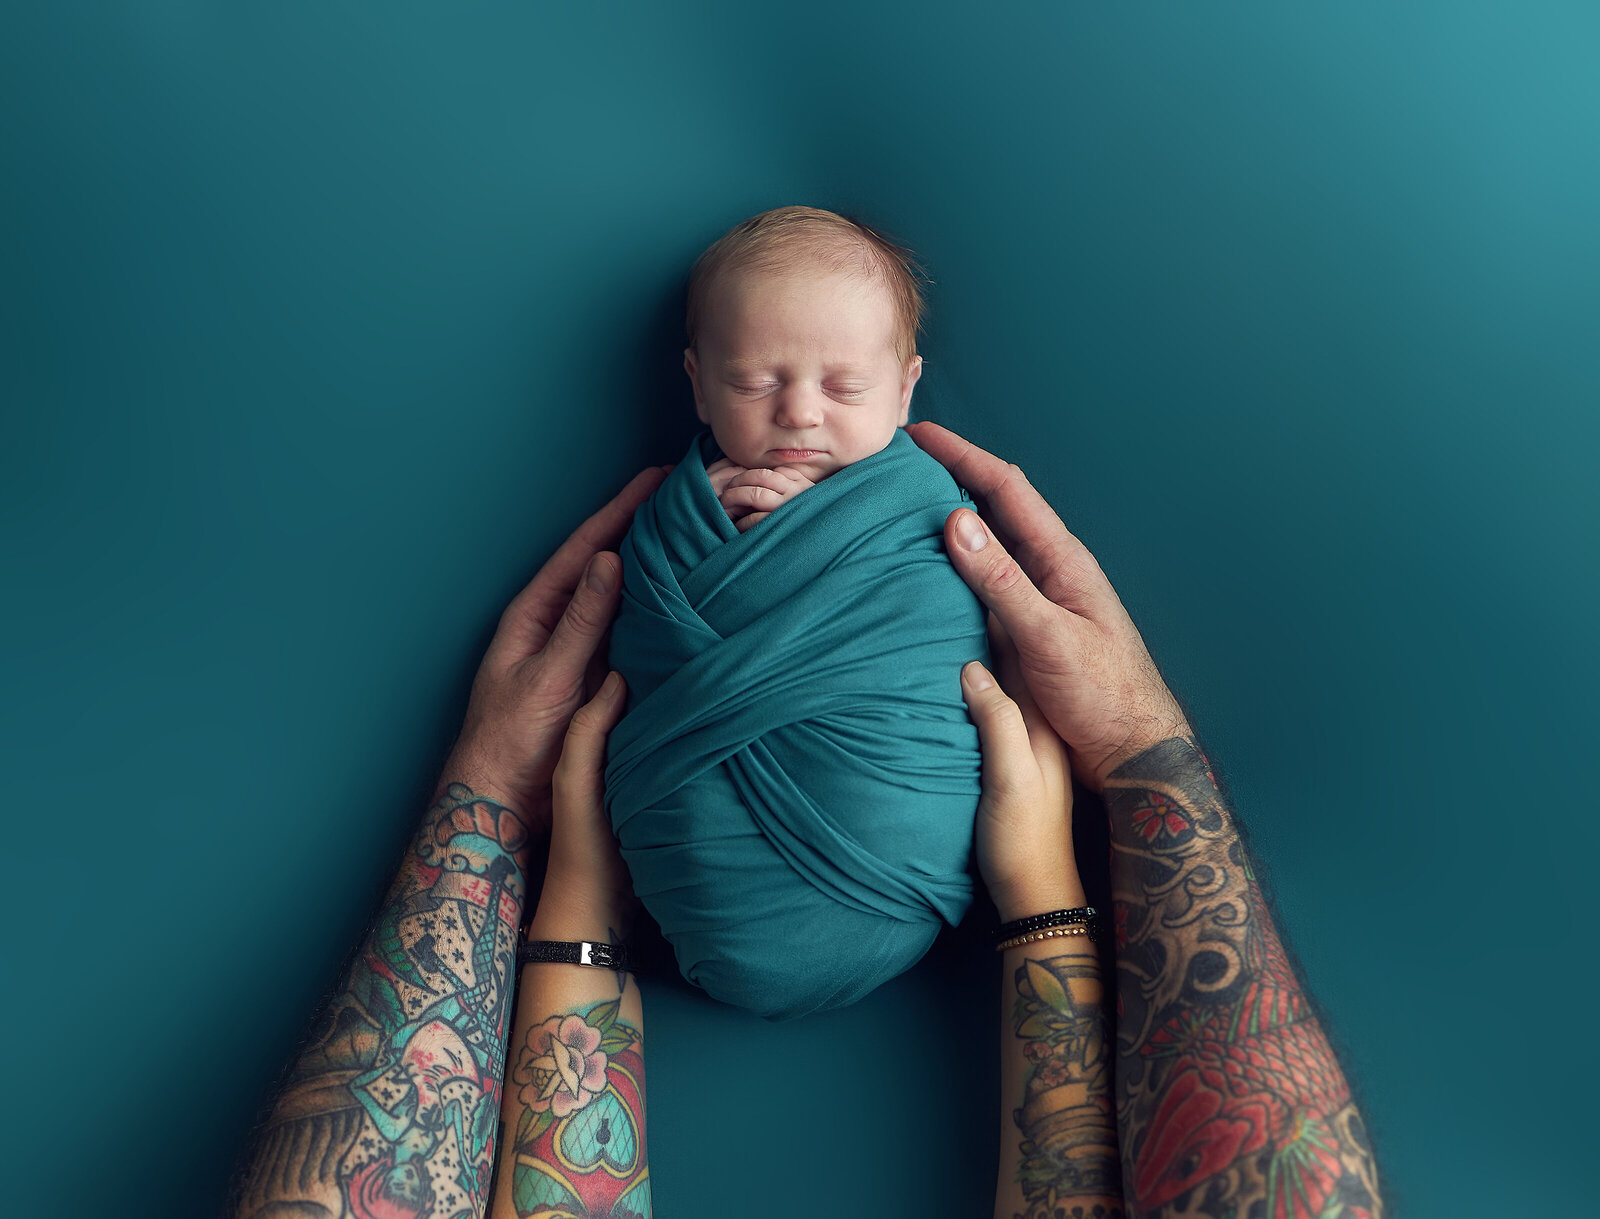 atlanta-best-award-winning-newborn-milestone-tattoos-arms-tattooed-month-months-boy-baby-portrait-studio-photography-photographer-twin-rivers-01